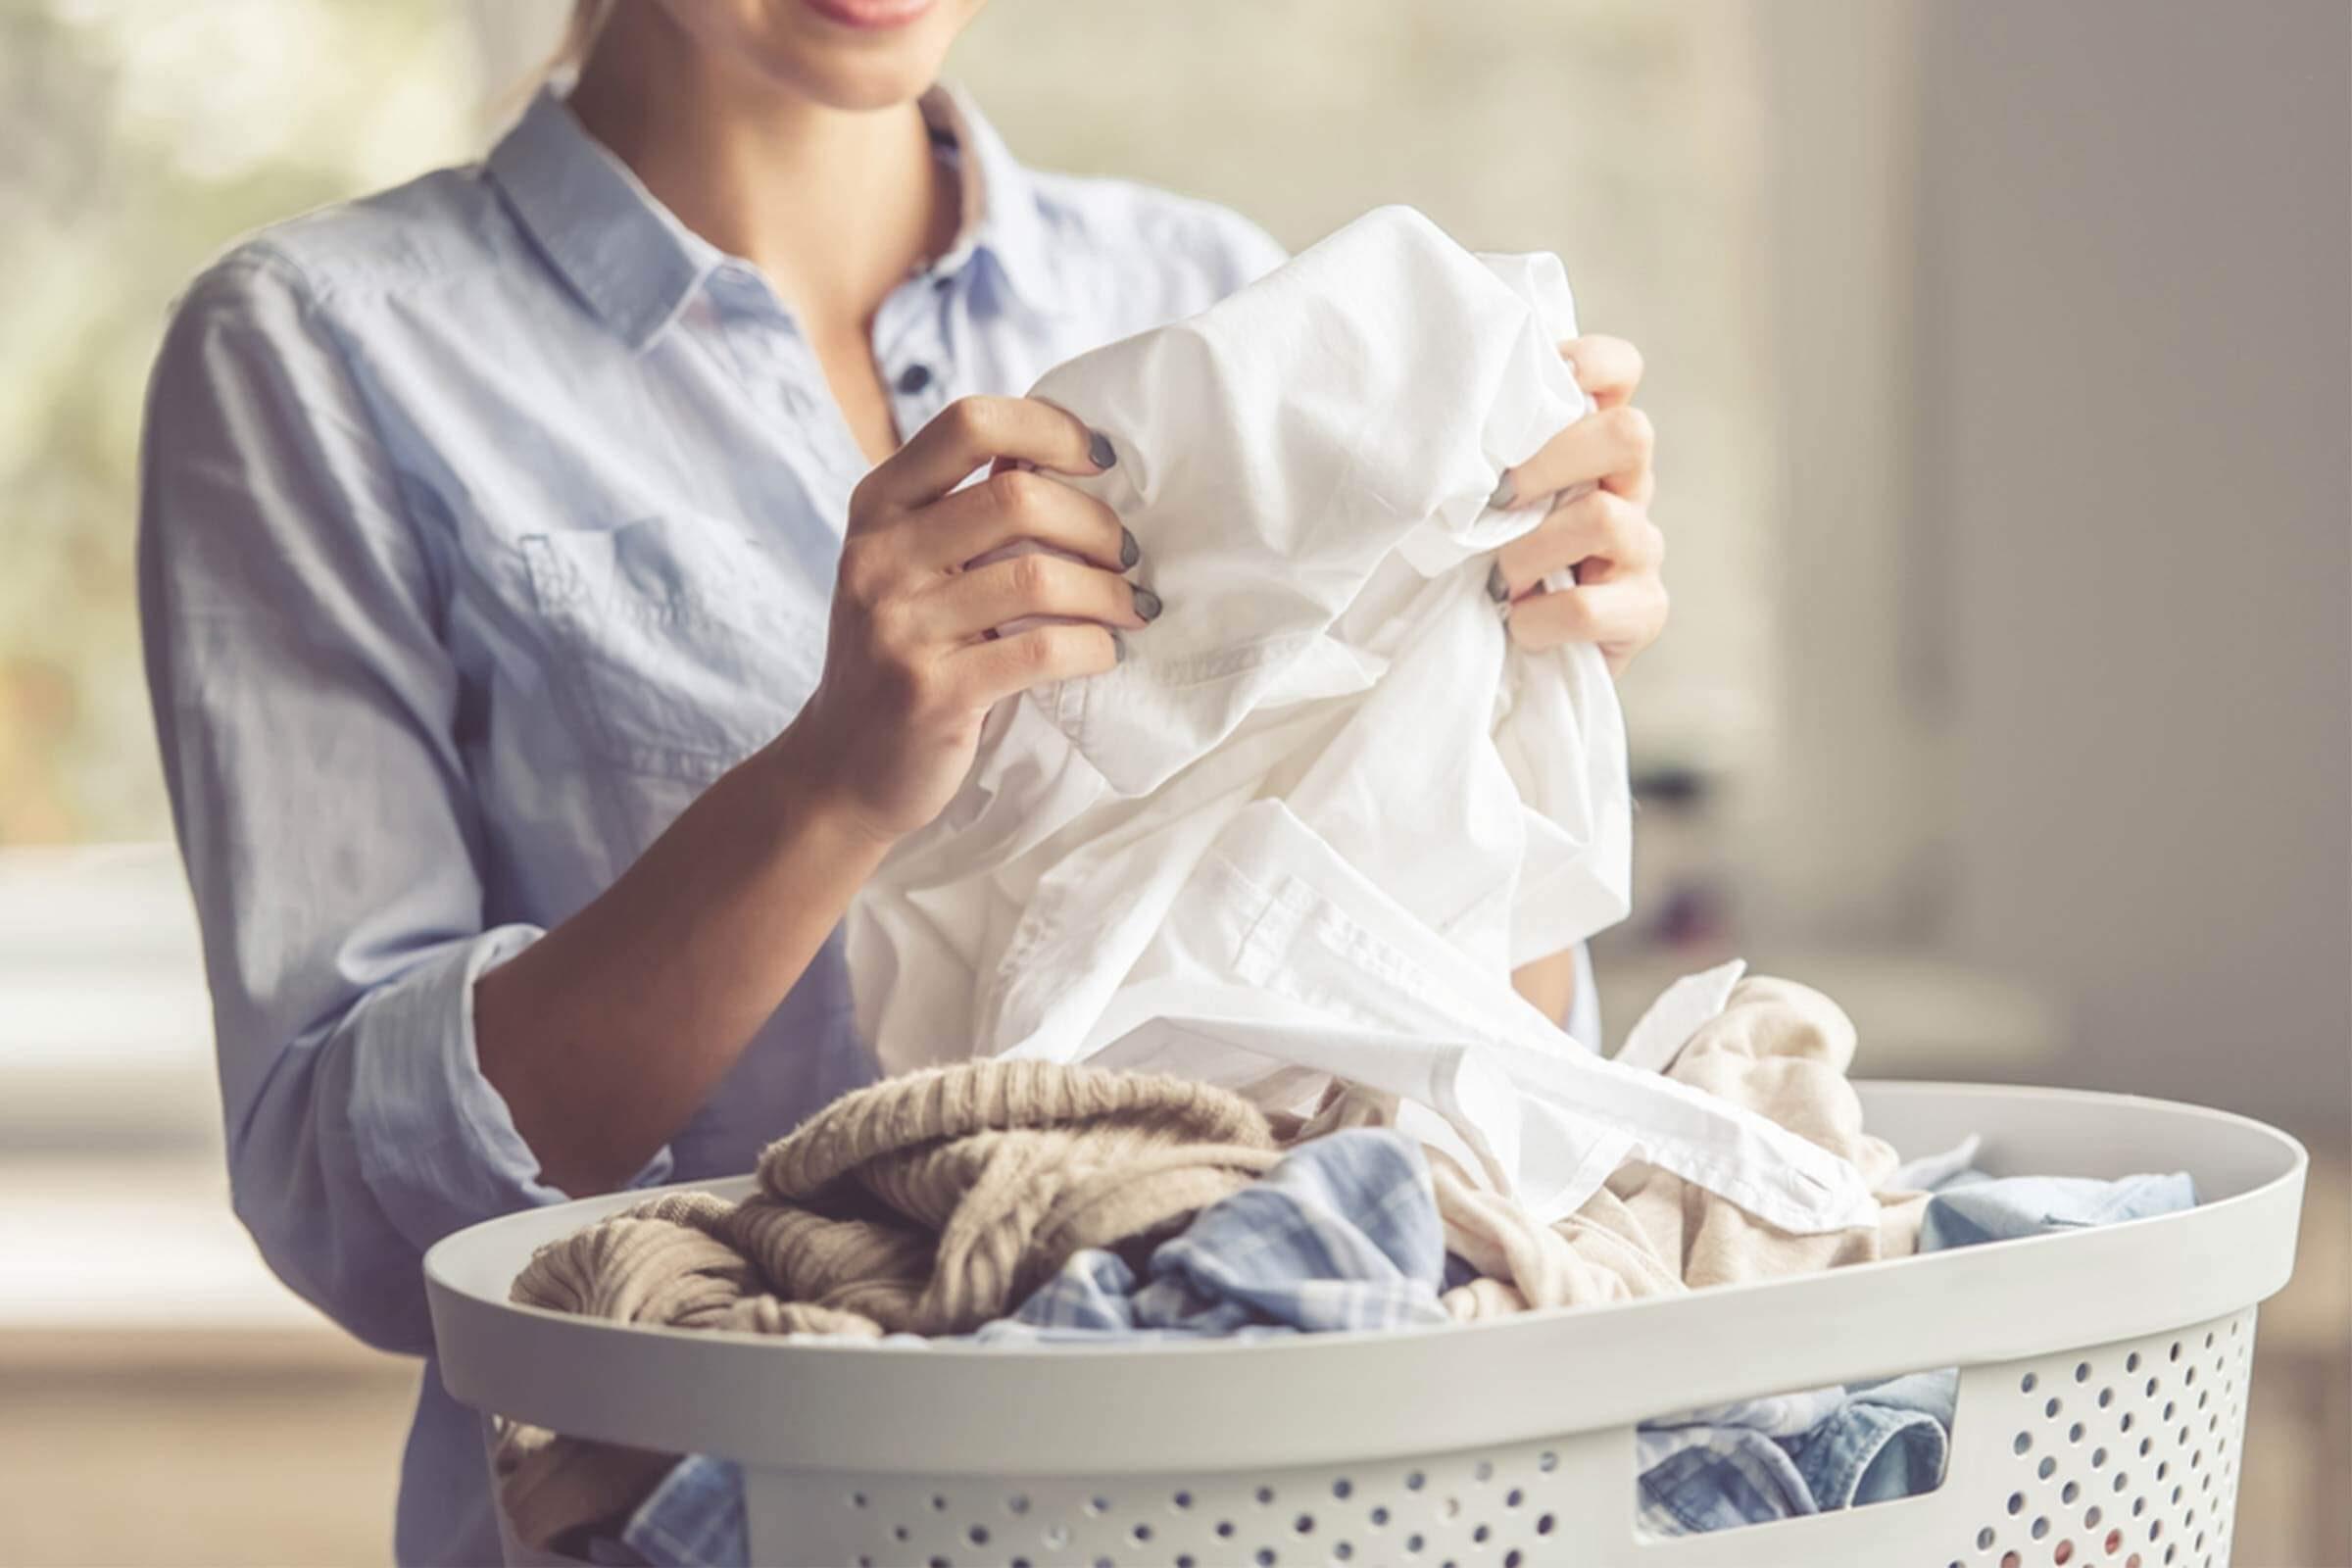 Underwear Antibacterial Detergent Remove Stains Peculiar Smell And Keep  Fragrance For Women's Underwear Detergent